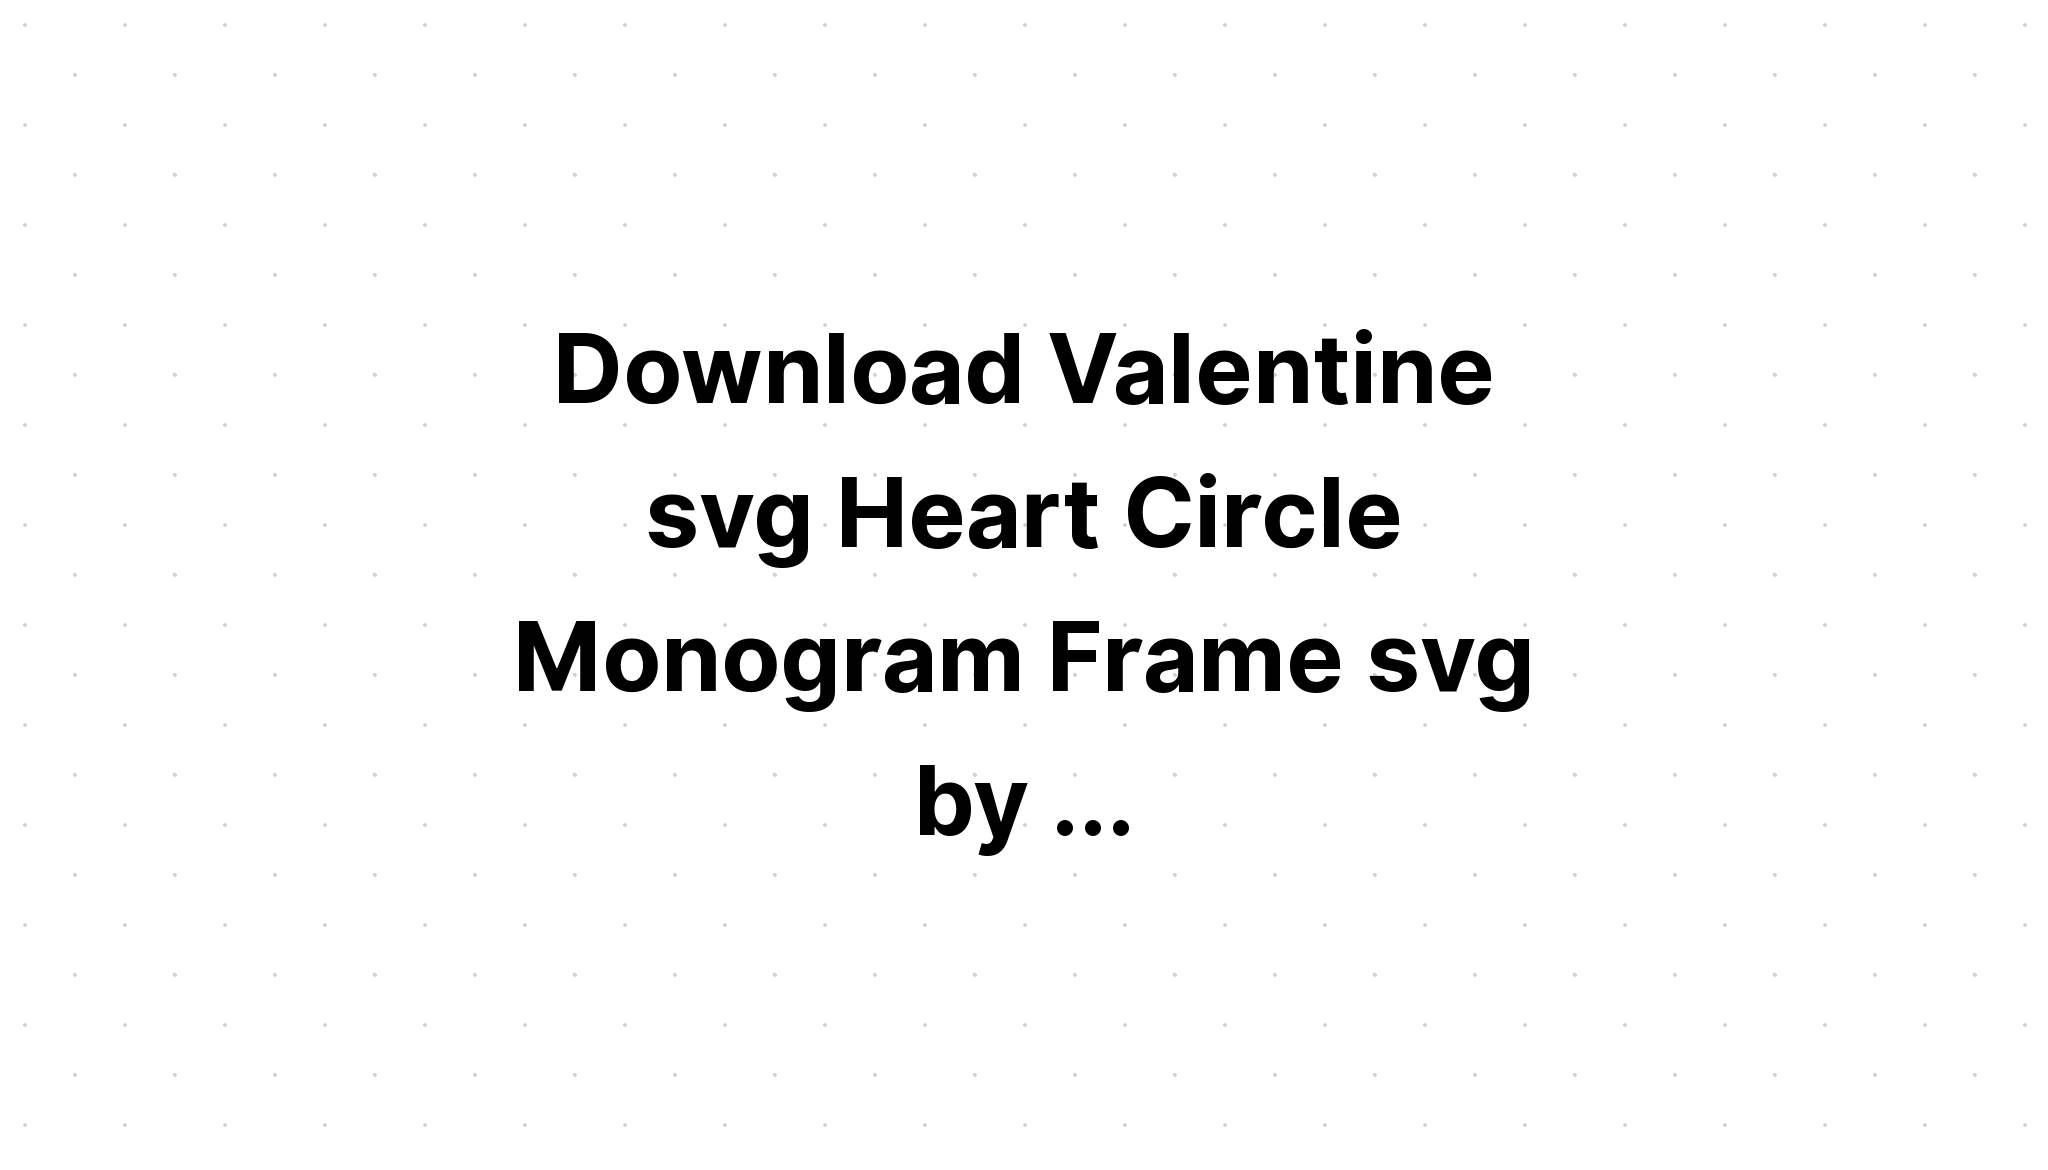 Download Valentine Monogram Svg Heart Monograms - Layered SVG Cut File